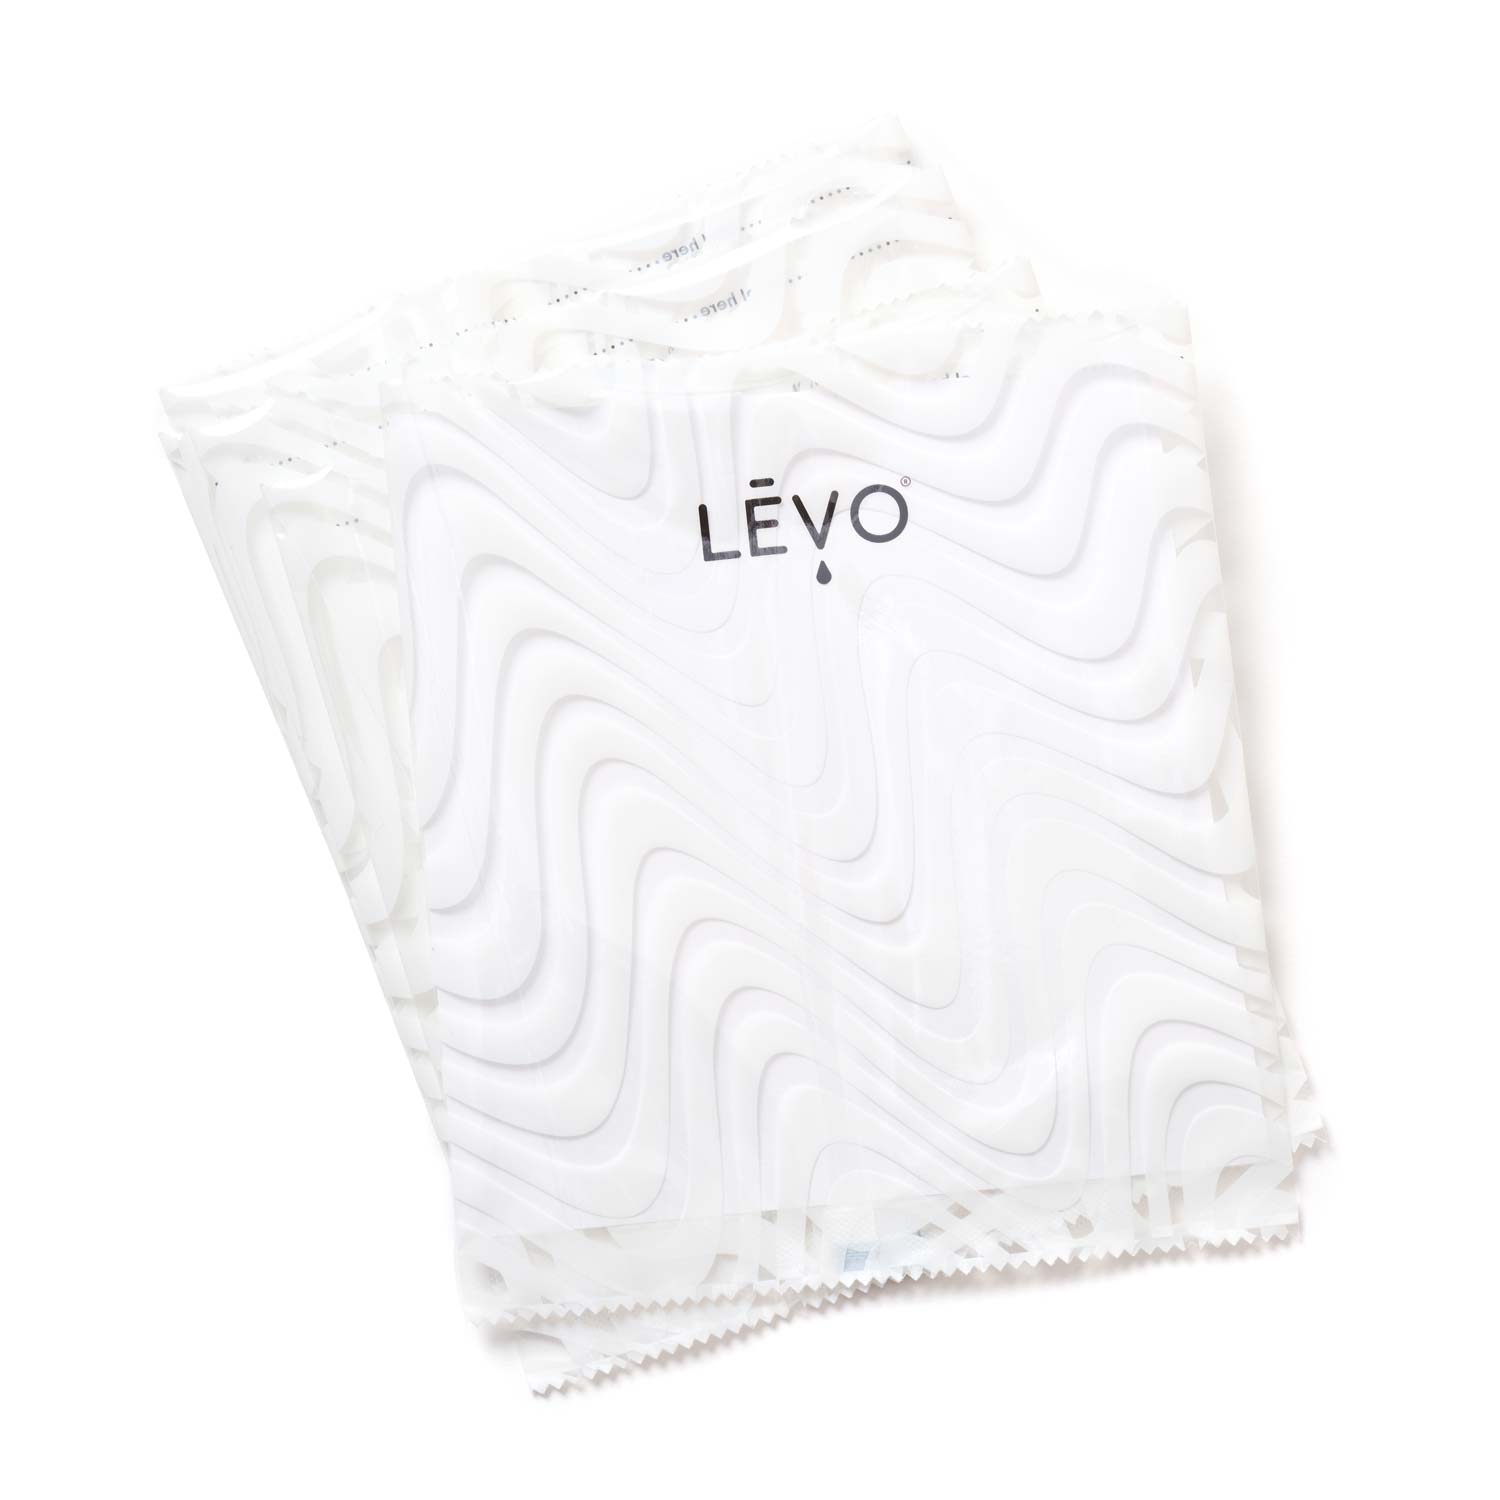 LEVO Large wrap refills in White